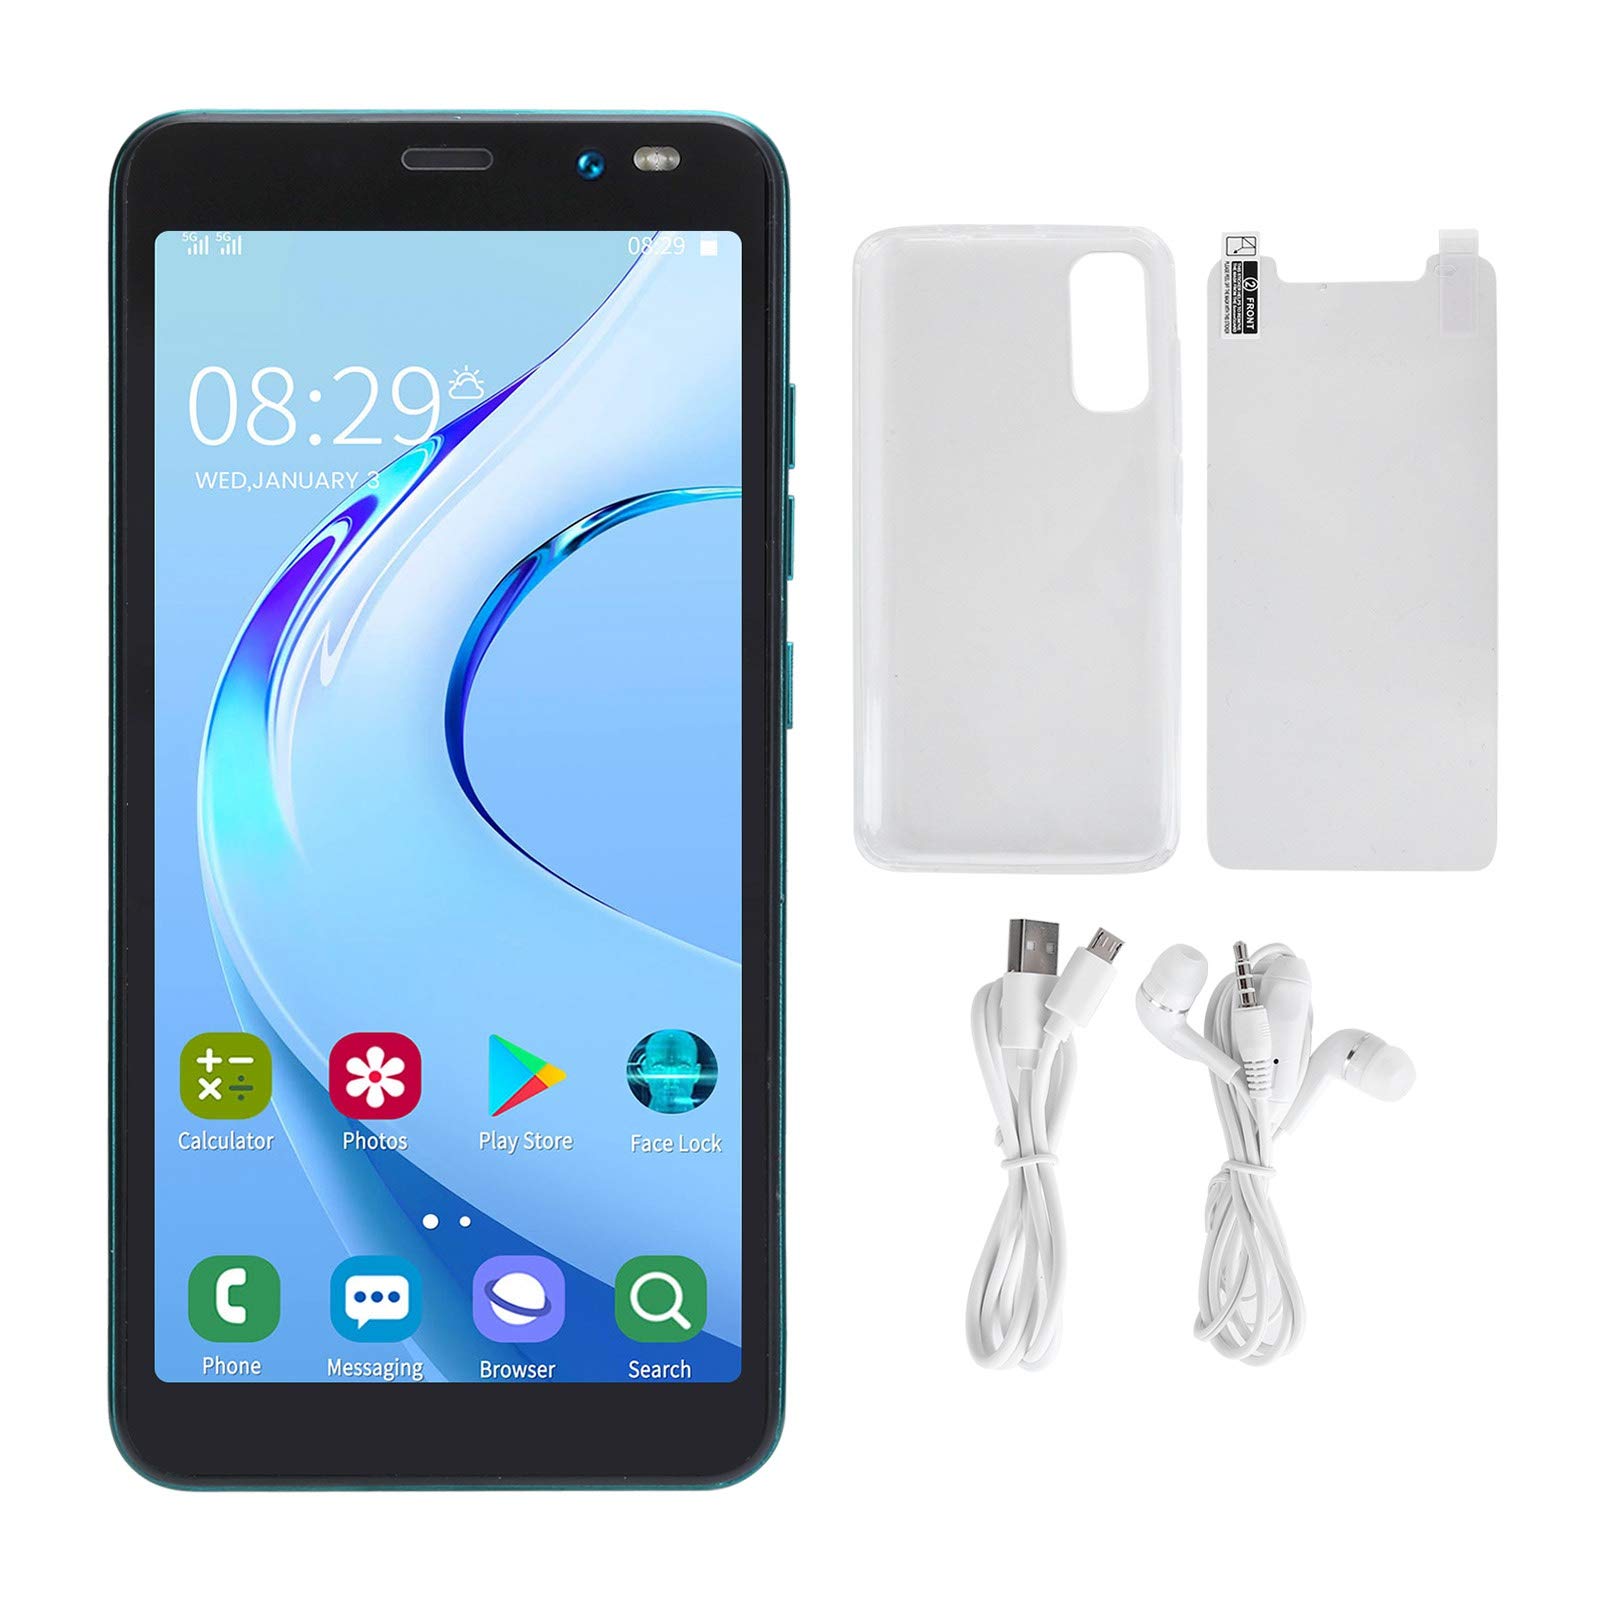 Cheap Rino4 Pro Android Smartphone Main Unit Mobile Phone 6.1 Inch Large Screen 1GB RAM + 8GB ROM 128GB Expansion Dual SIM 2 Megapixels + 5 Megapixel Camera 2200mAh Battery (Black)